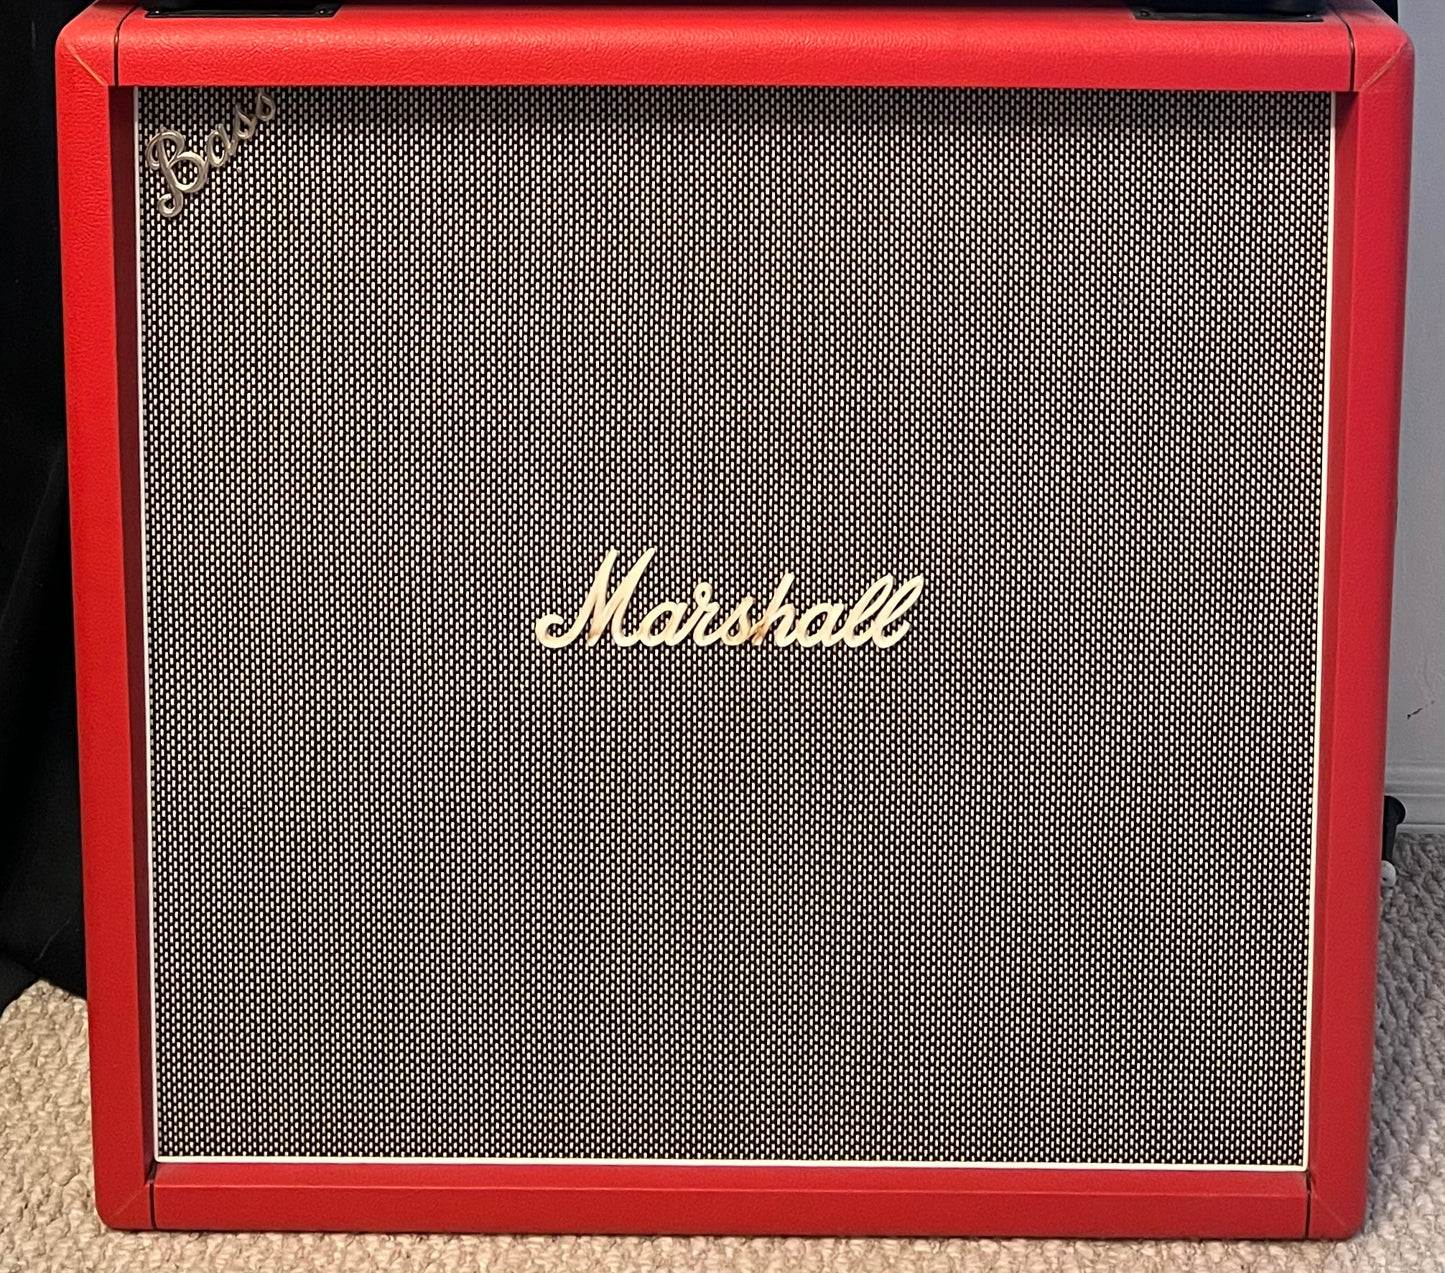 Marshall 4x12 “Bass” bottom cabinet loaded with vintage Greenbacks